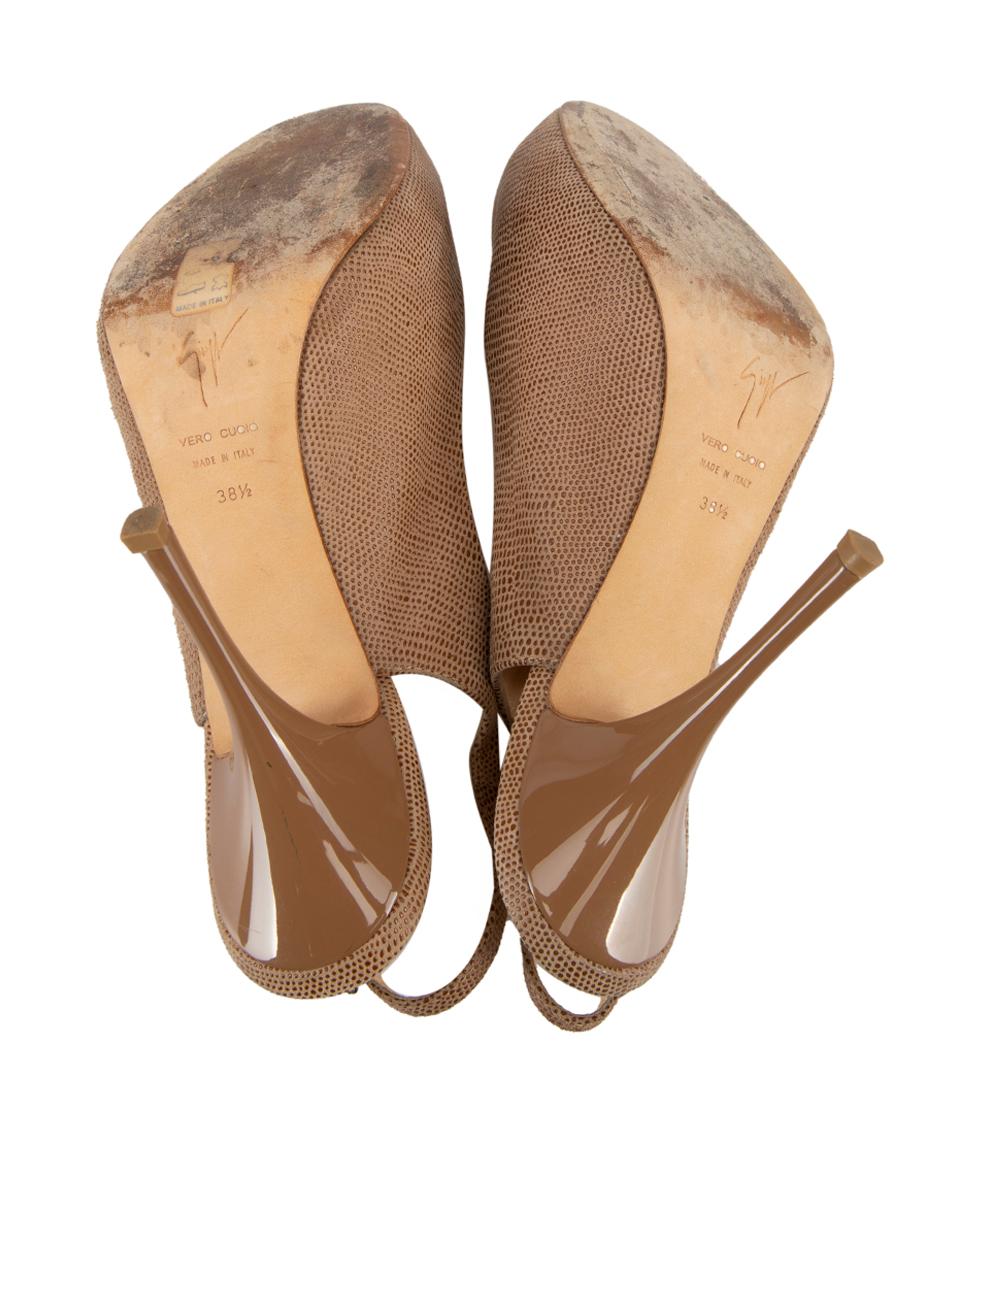 Giuseppe Zanotti Women's Brown Patterned Leather Slingback Heels For Sale 2